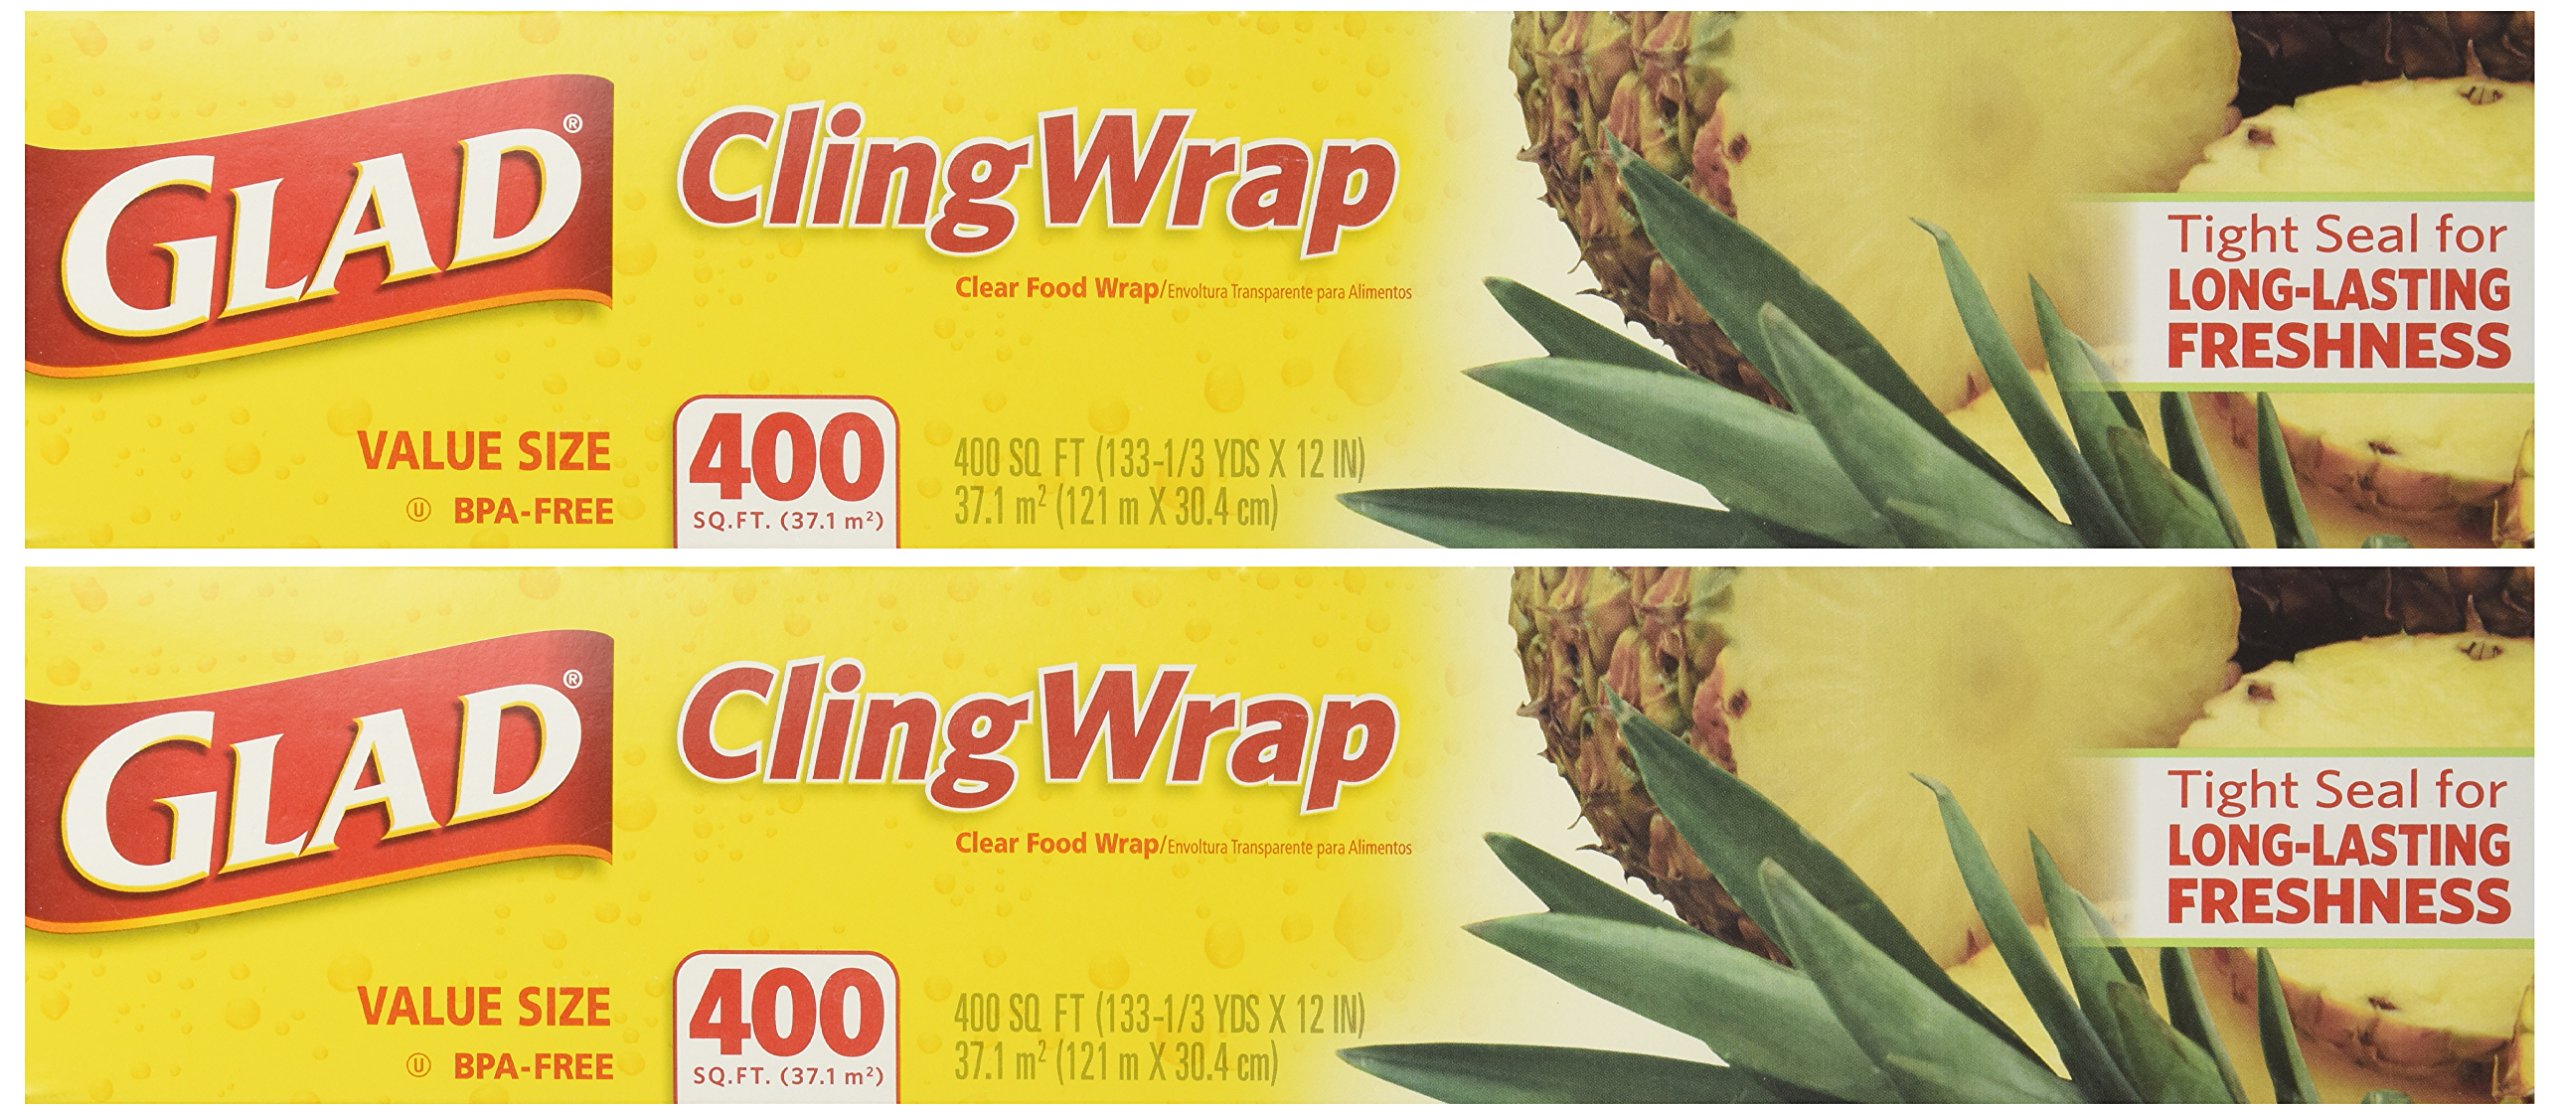 Glad ClingWrap Plastic Food Wrap - 100 Square Foot Roll